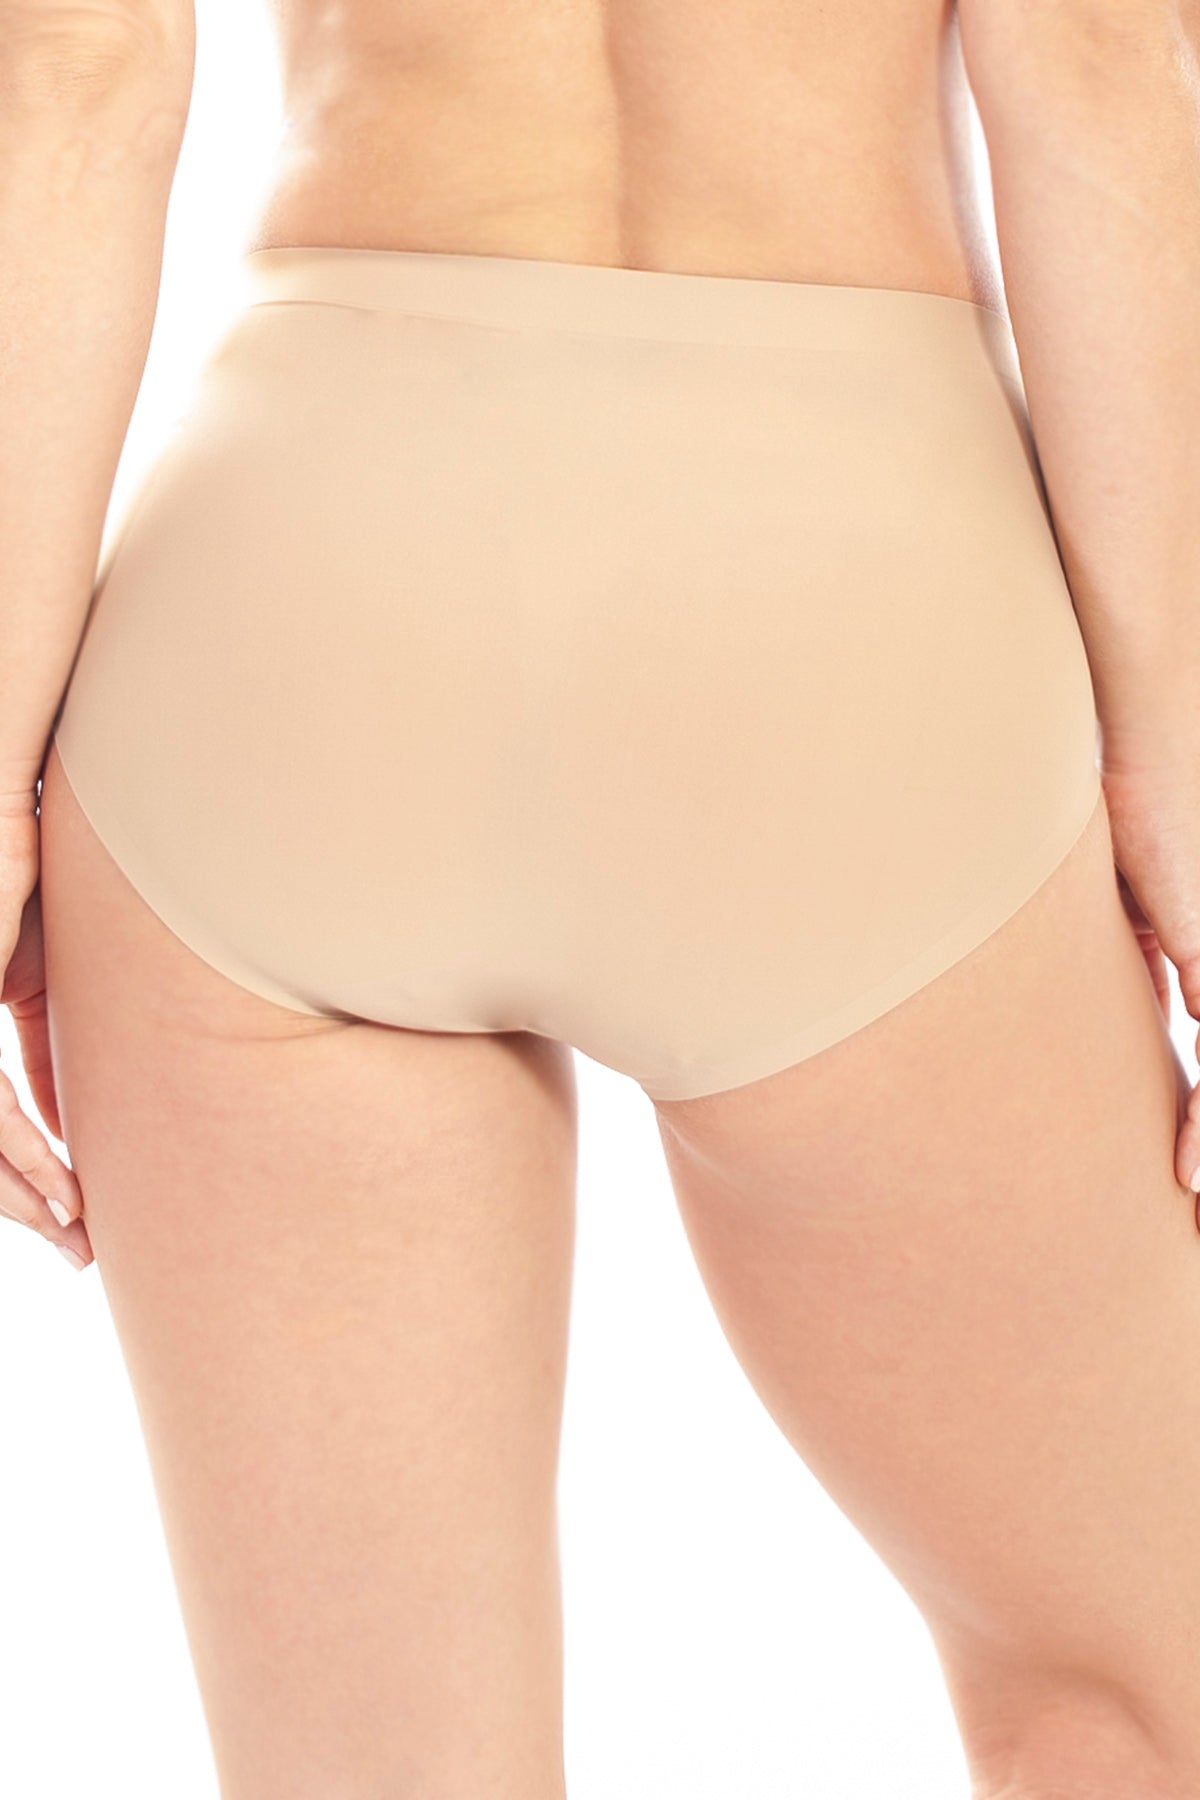 SHAN Antibacterial Cotton Crotch Seamless Underwear High Quality